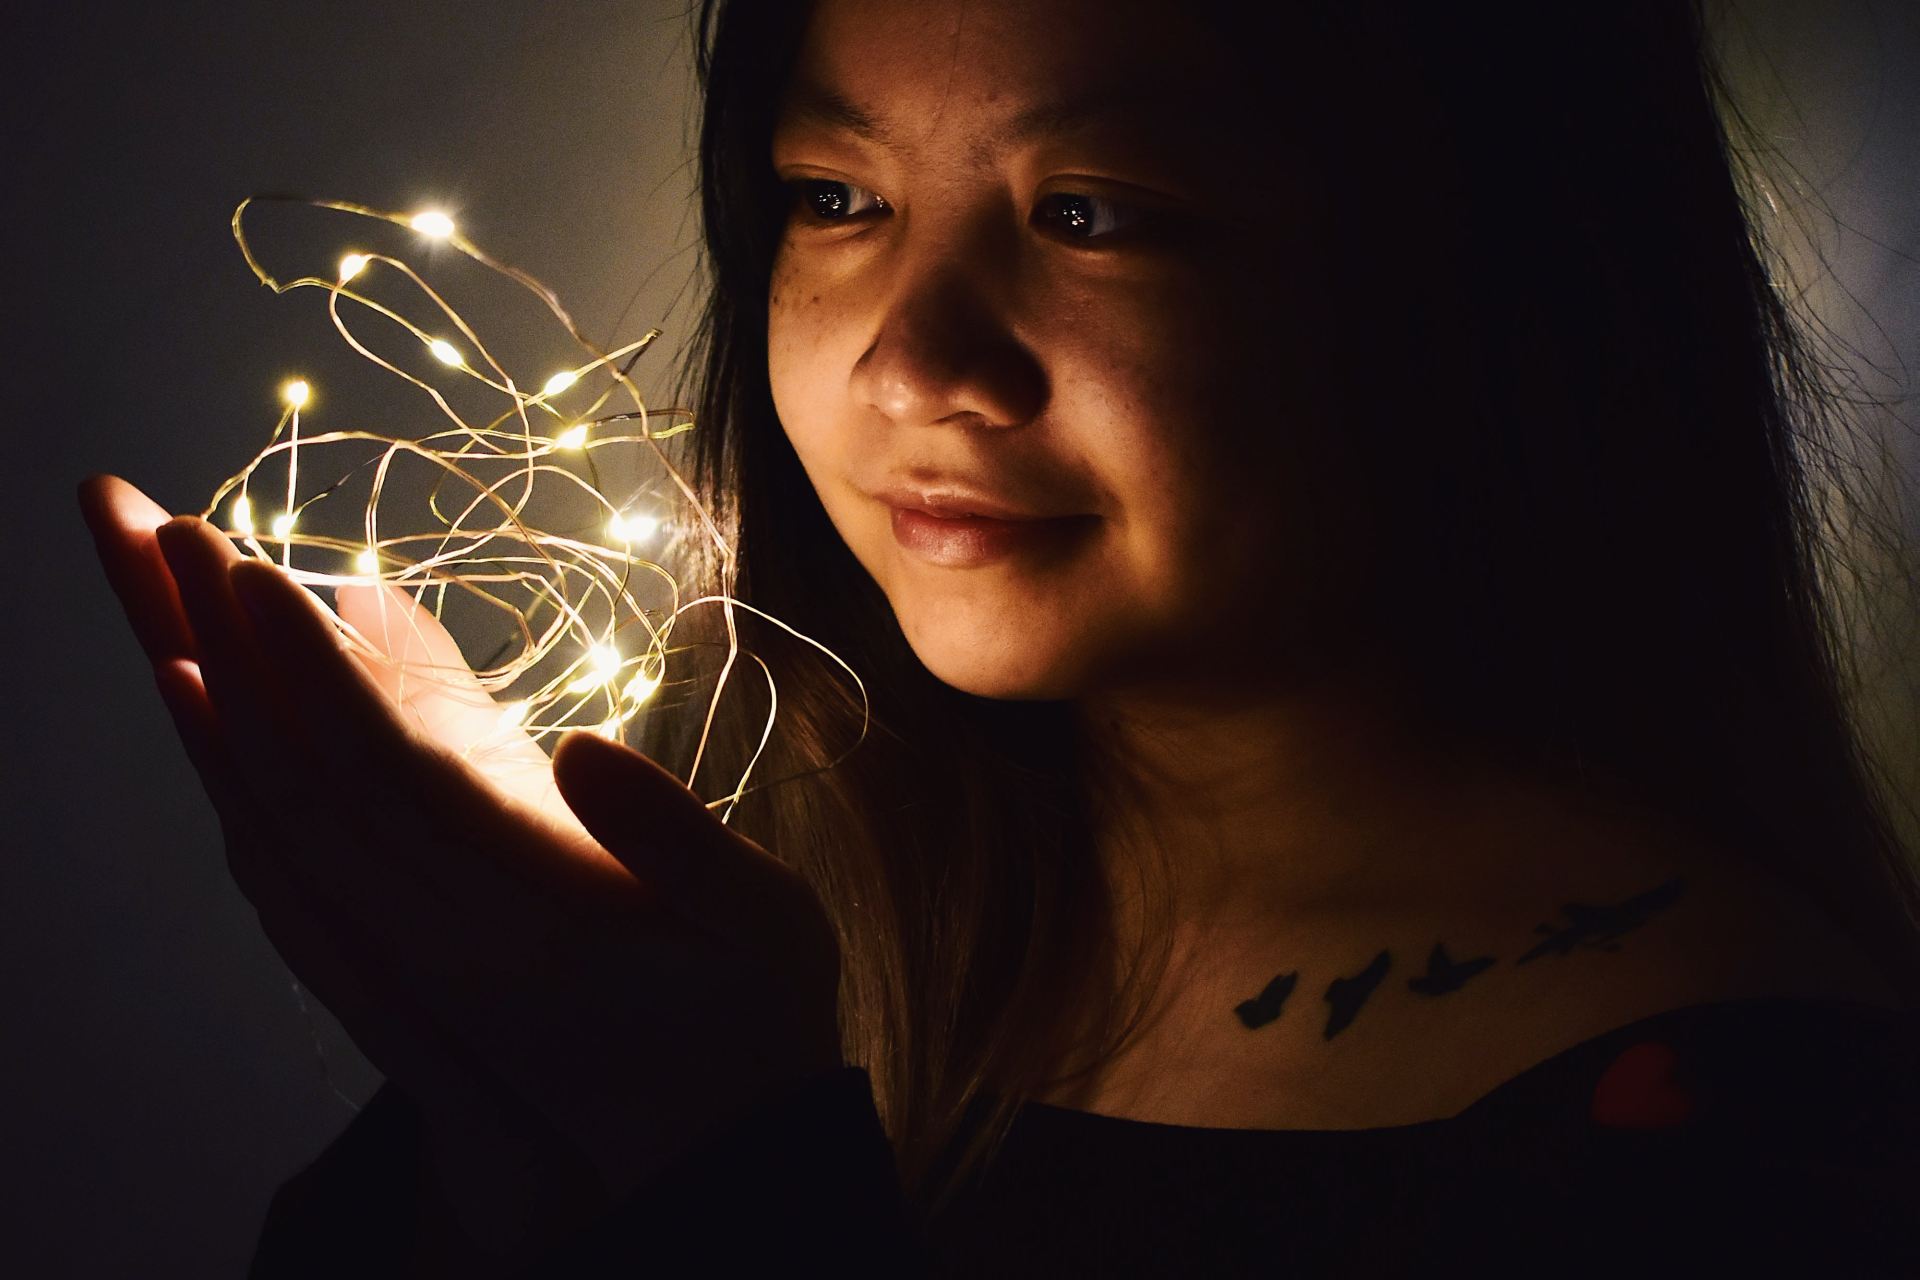 woman holding string lights in dark room